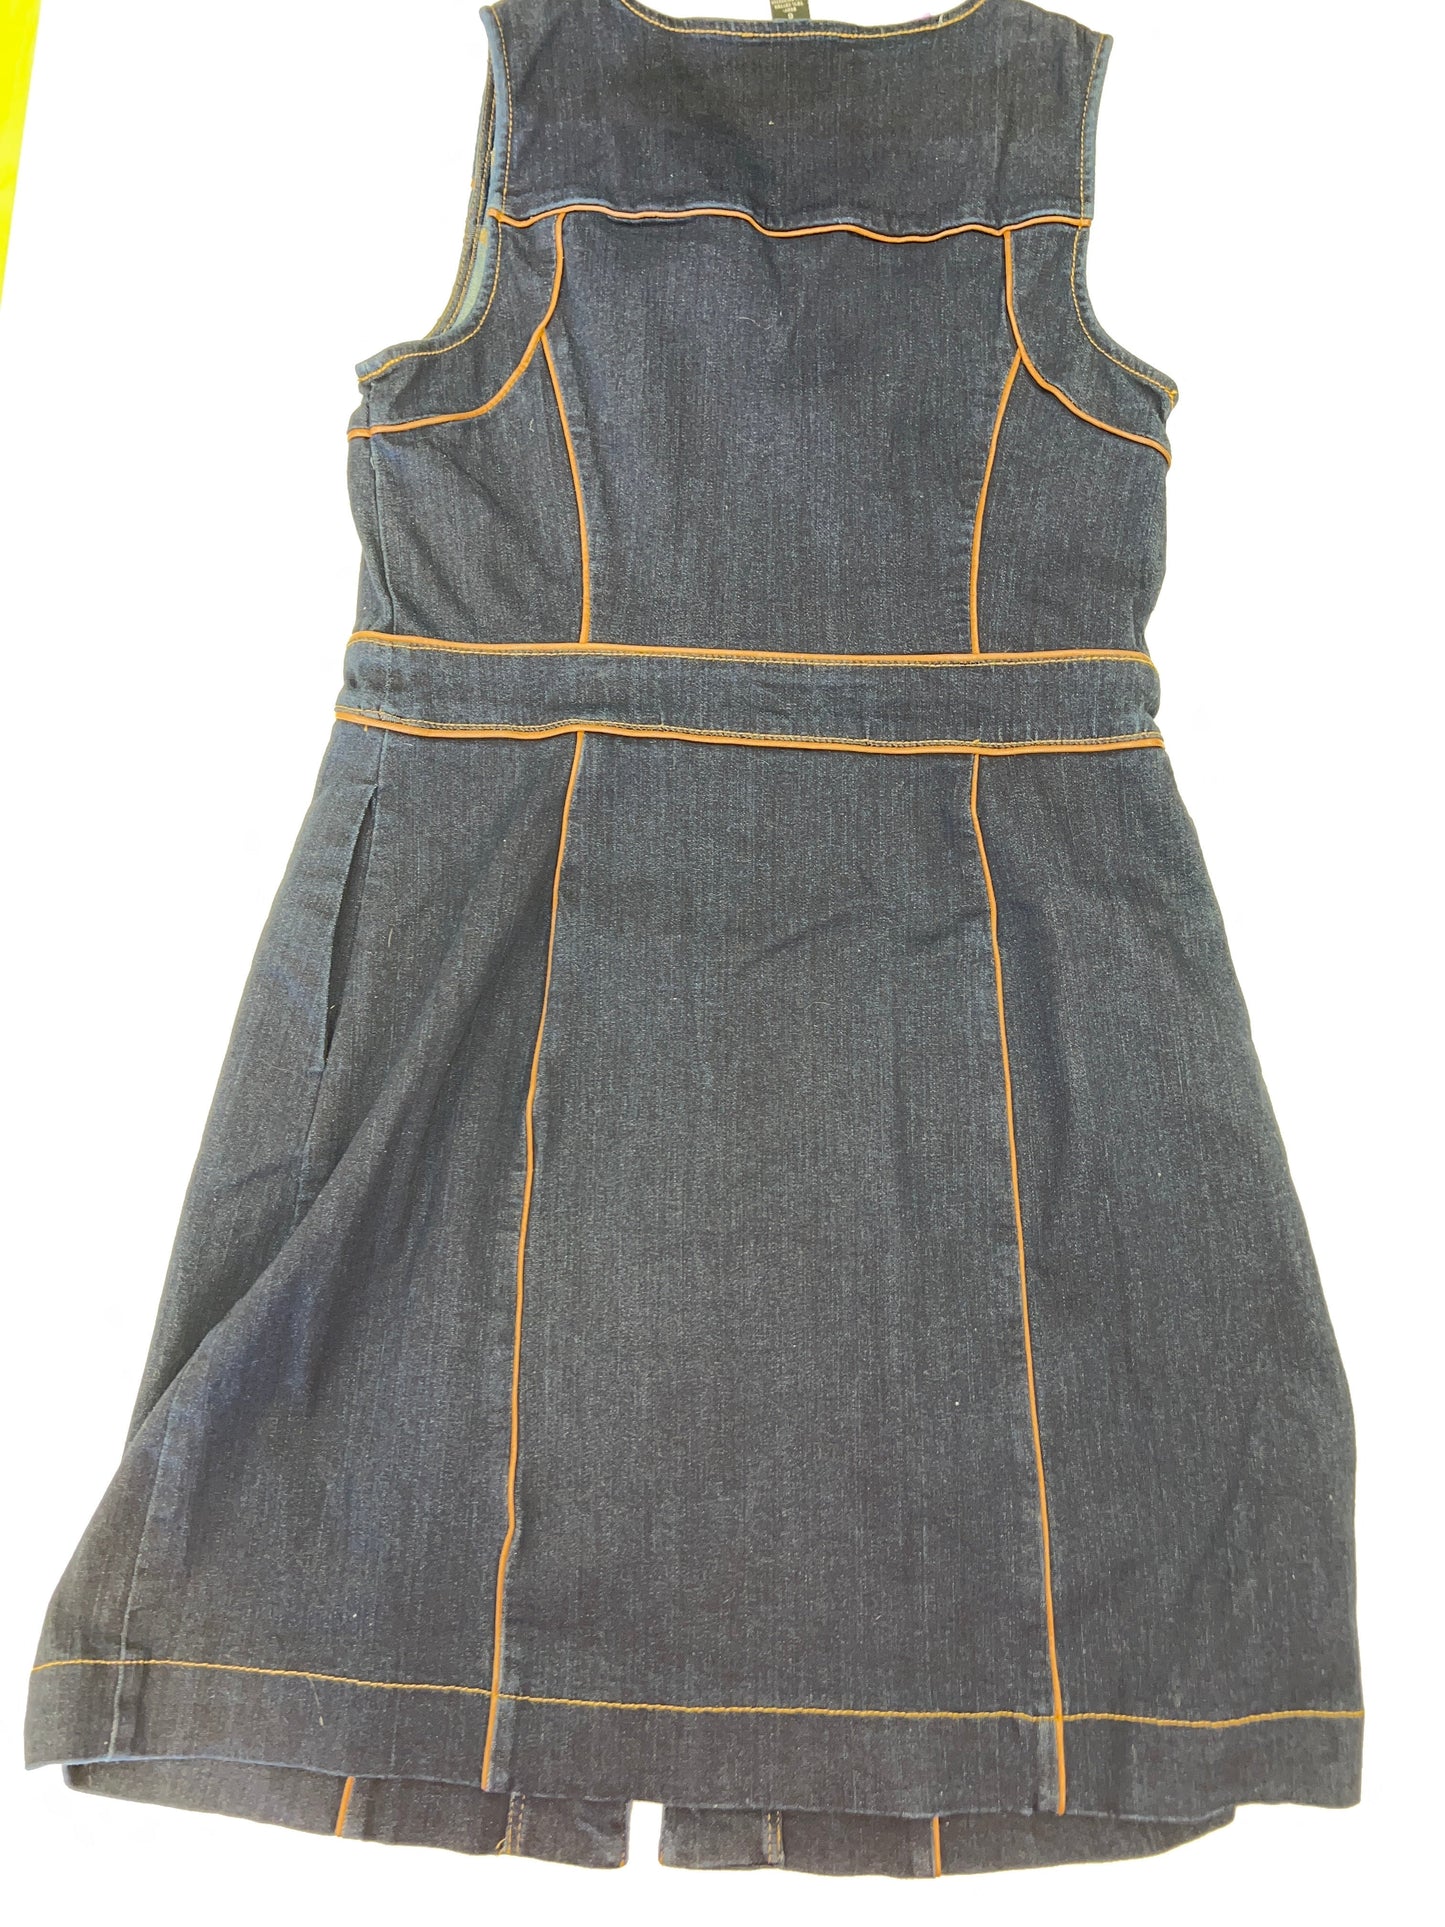 Blue Denim Dress Casual Short Inc, Size 6